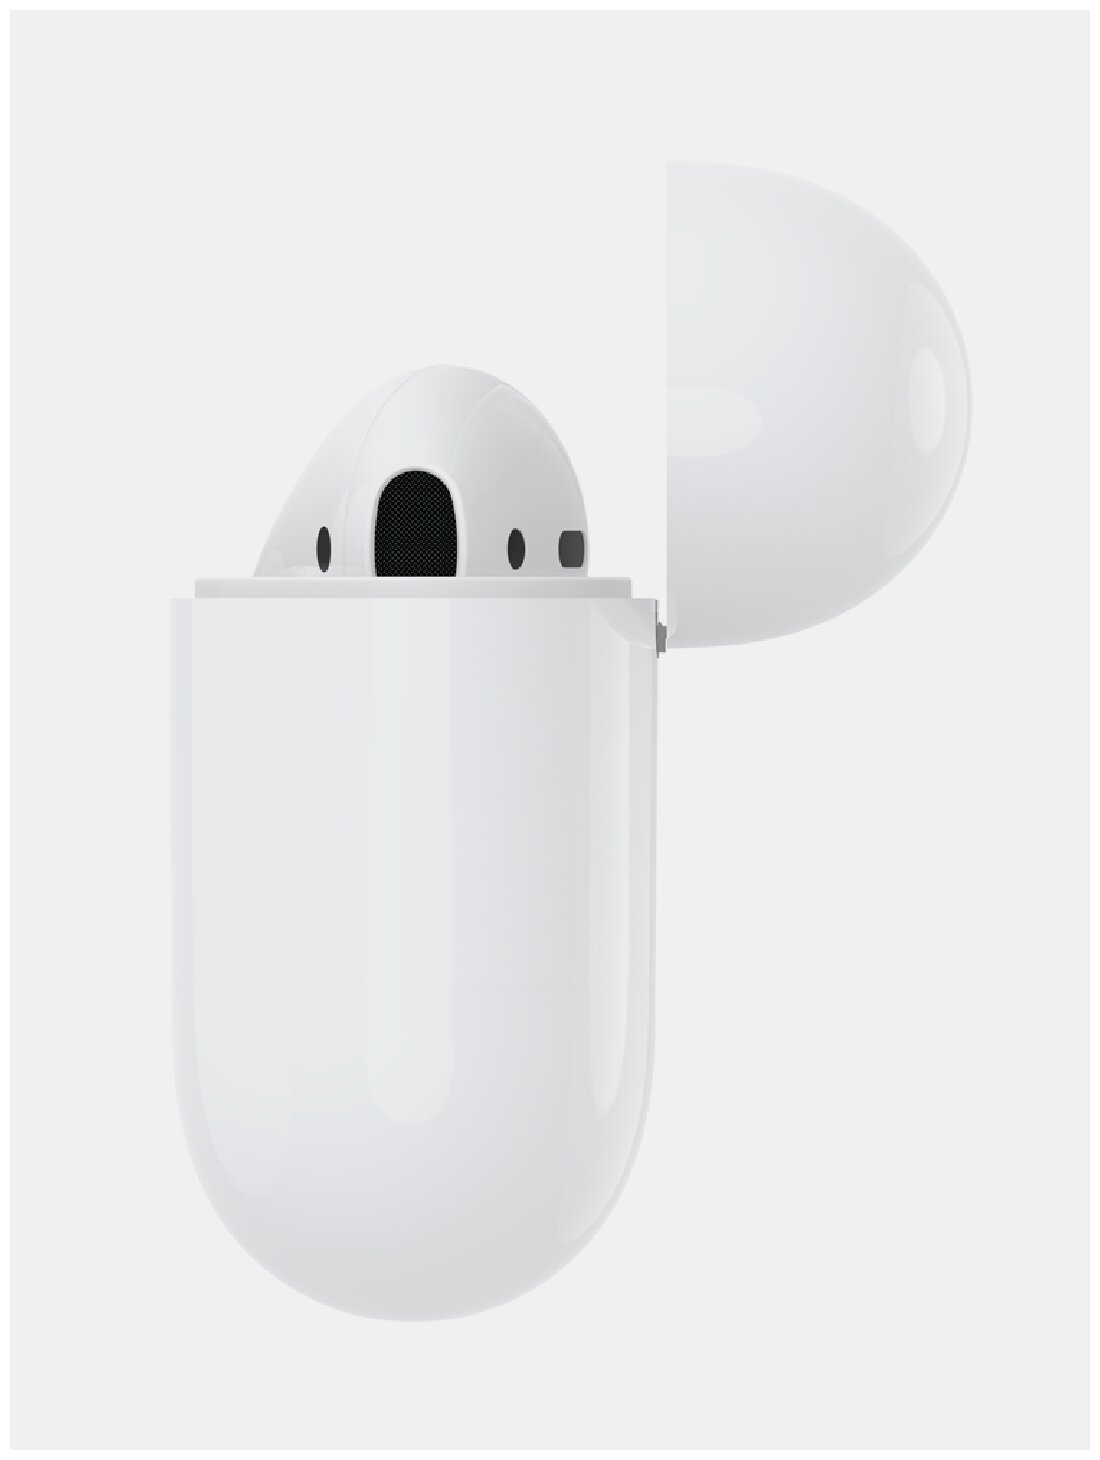 Гарнитура DEPPA Air Neo, Bluetooth, вкладыши, белый - фото №3